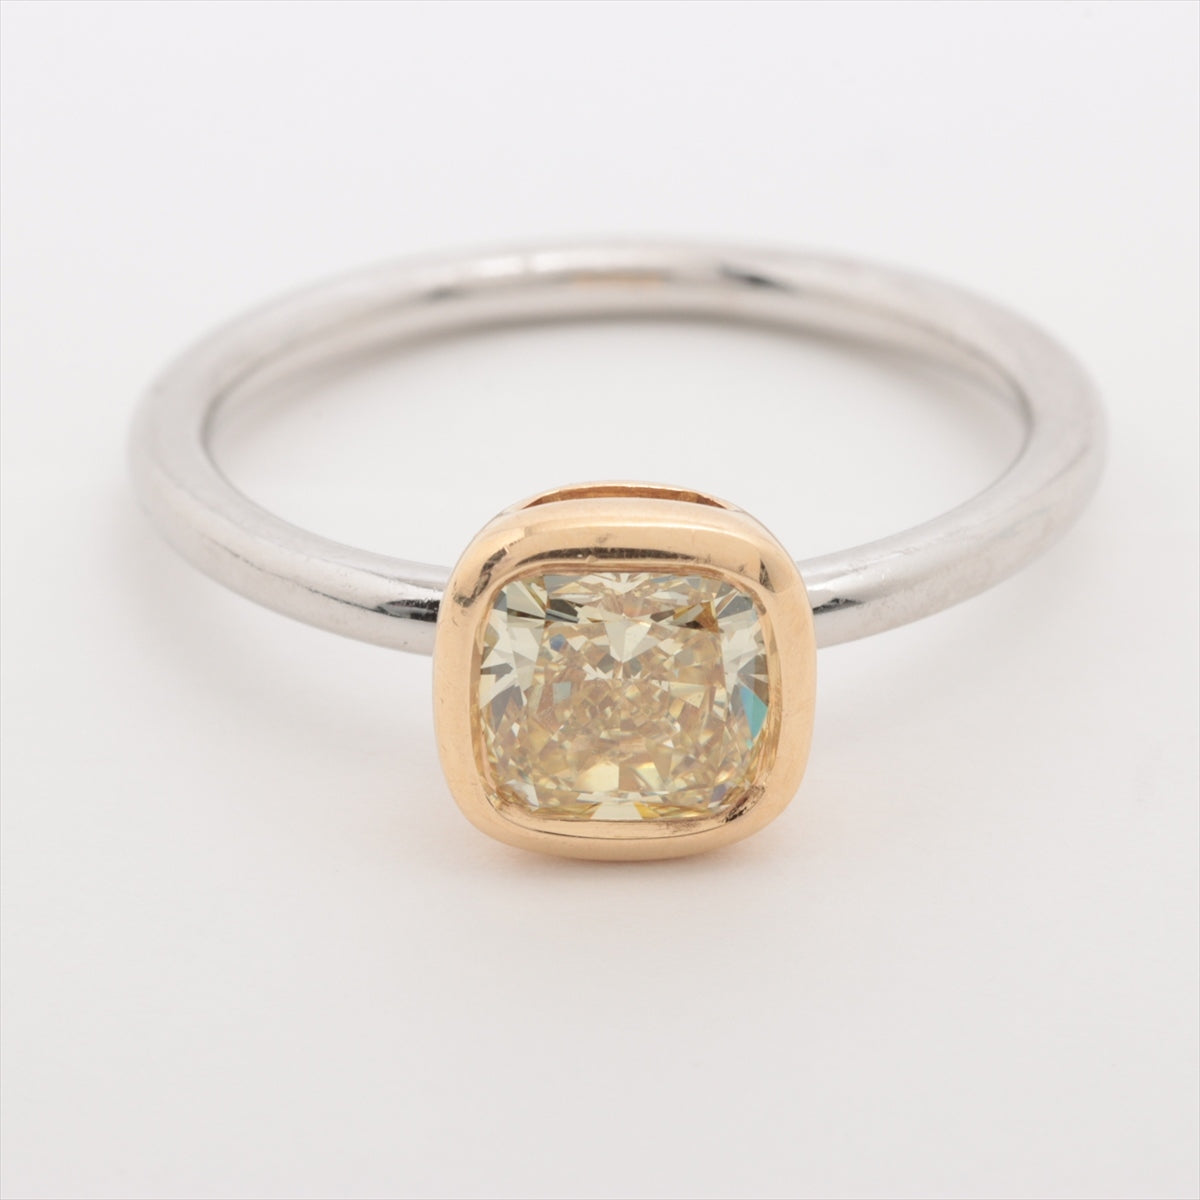 Tiffany Bezet Yellow diamond rings 750(YG)×Pt950 3.4g 1.01 FAINT YELLOW VS1 Cushion MB